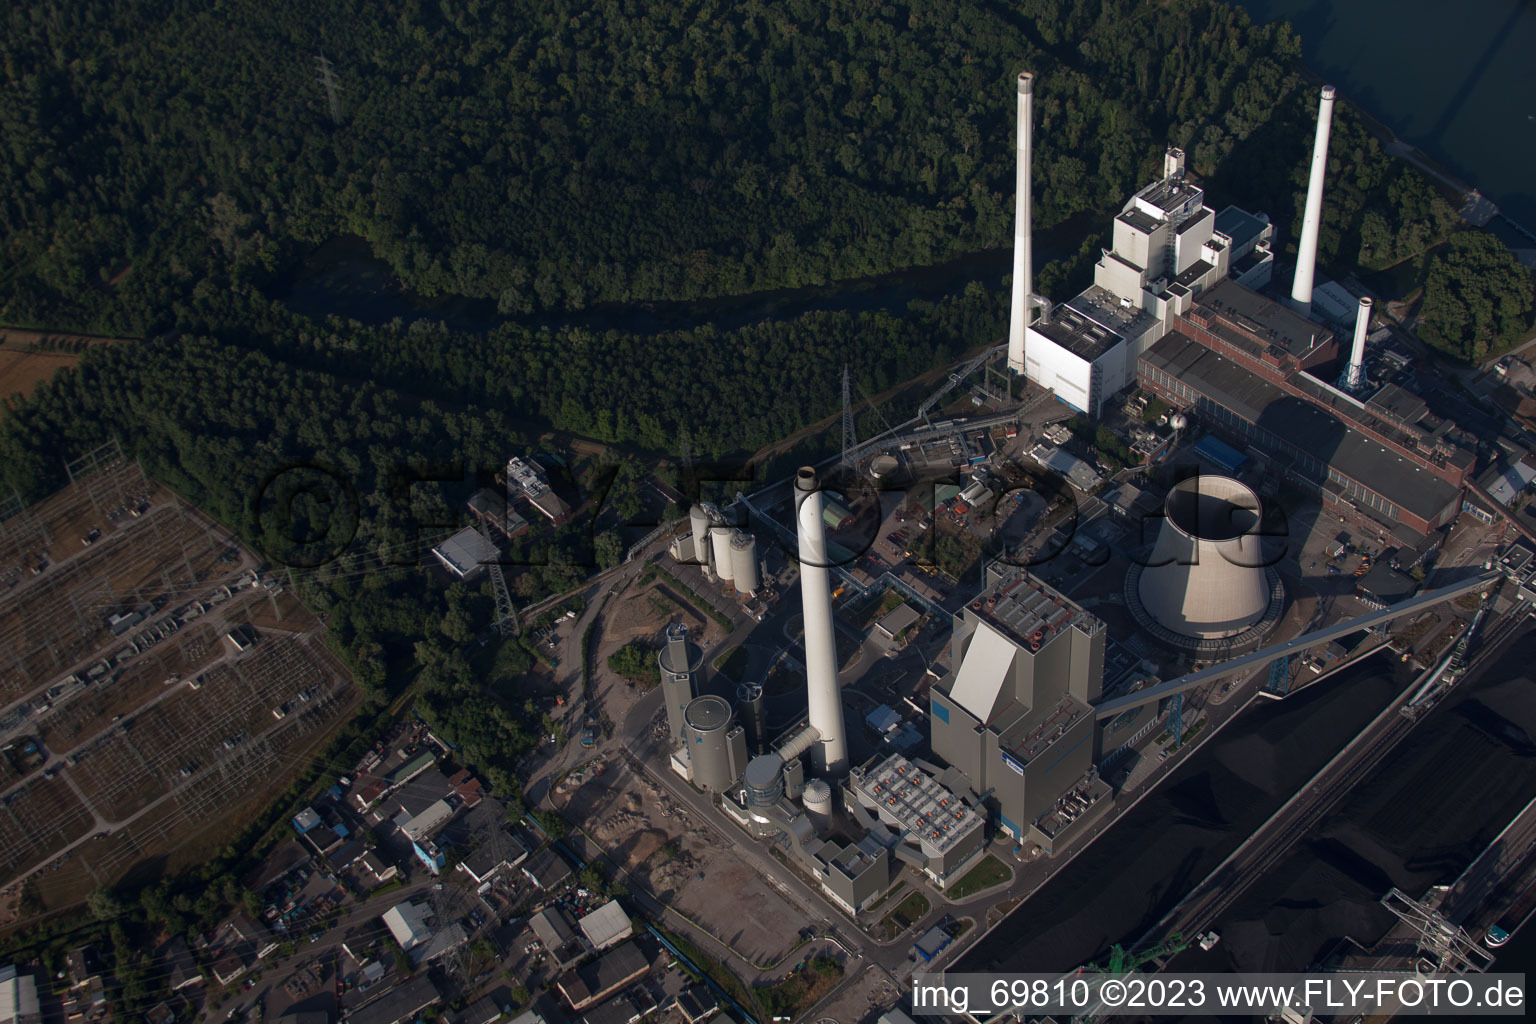 Oblique view of Coal-fired power plant on Rheinhafen in the district Rheinhafen in Karlsruhe in the state Baden-Wuerttemberg, Germany